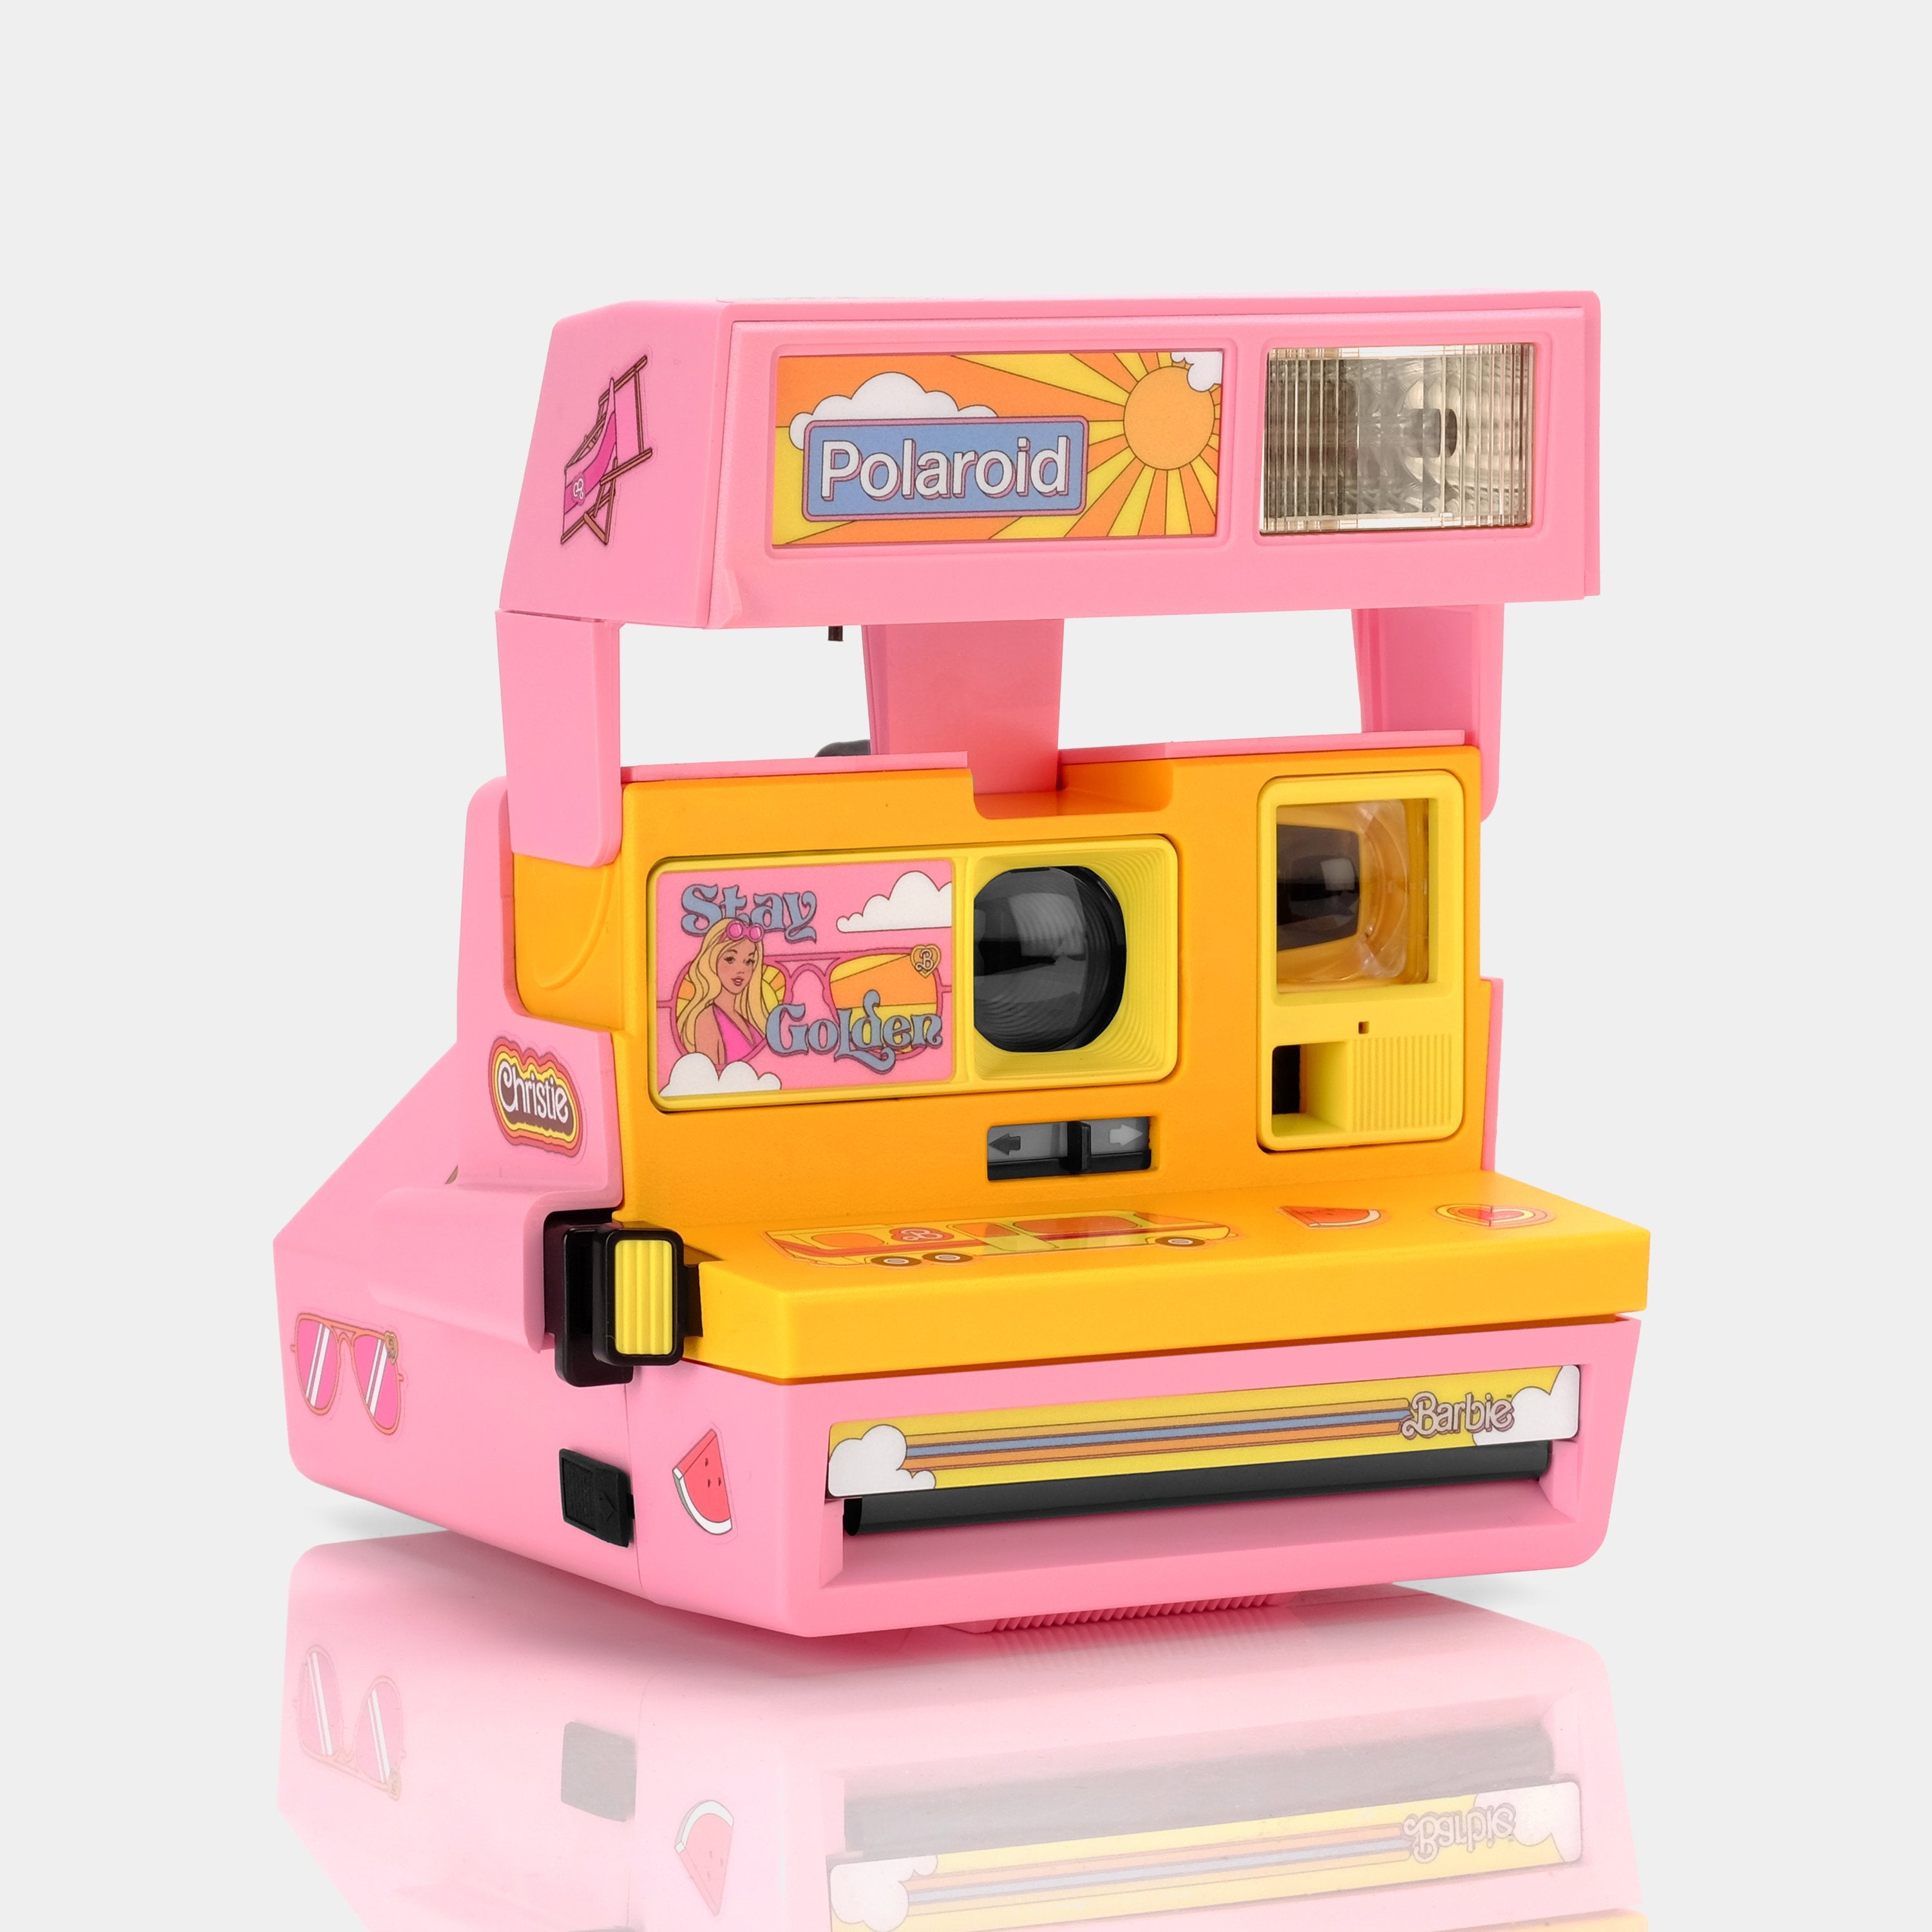 Polaroid 600 Camera - Malibu Barbie Edition - image 1 of 8